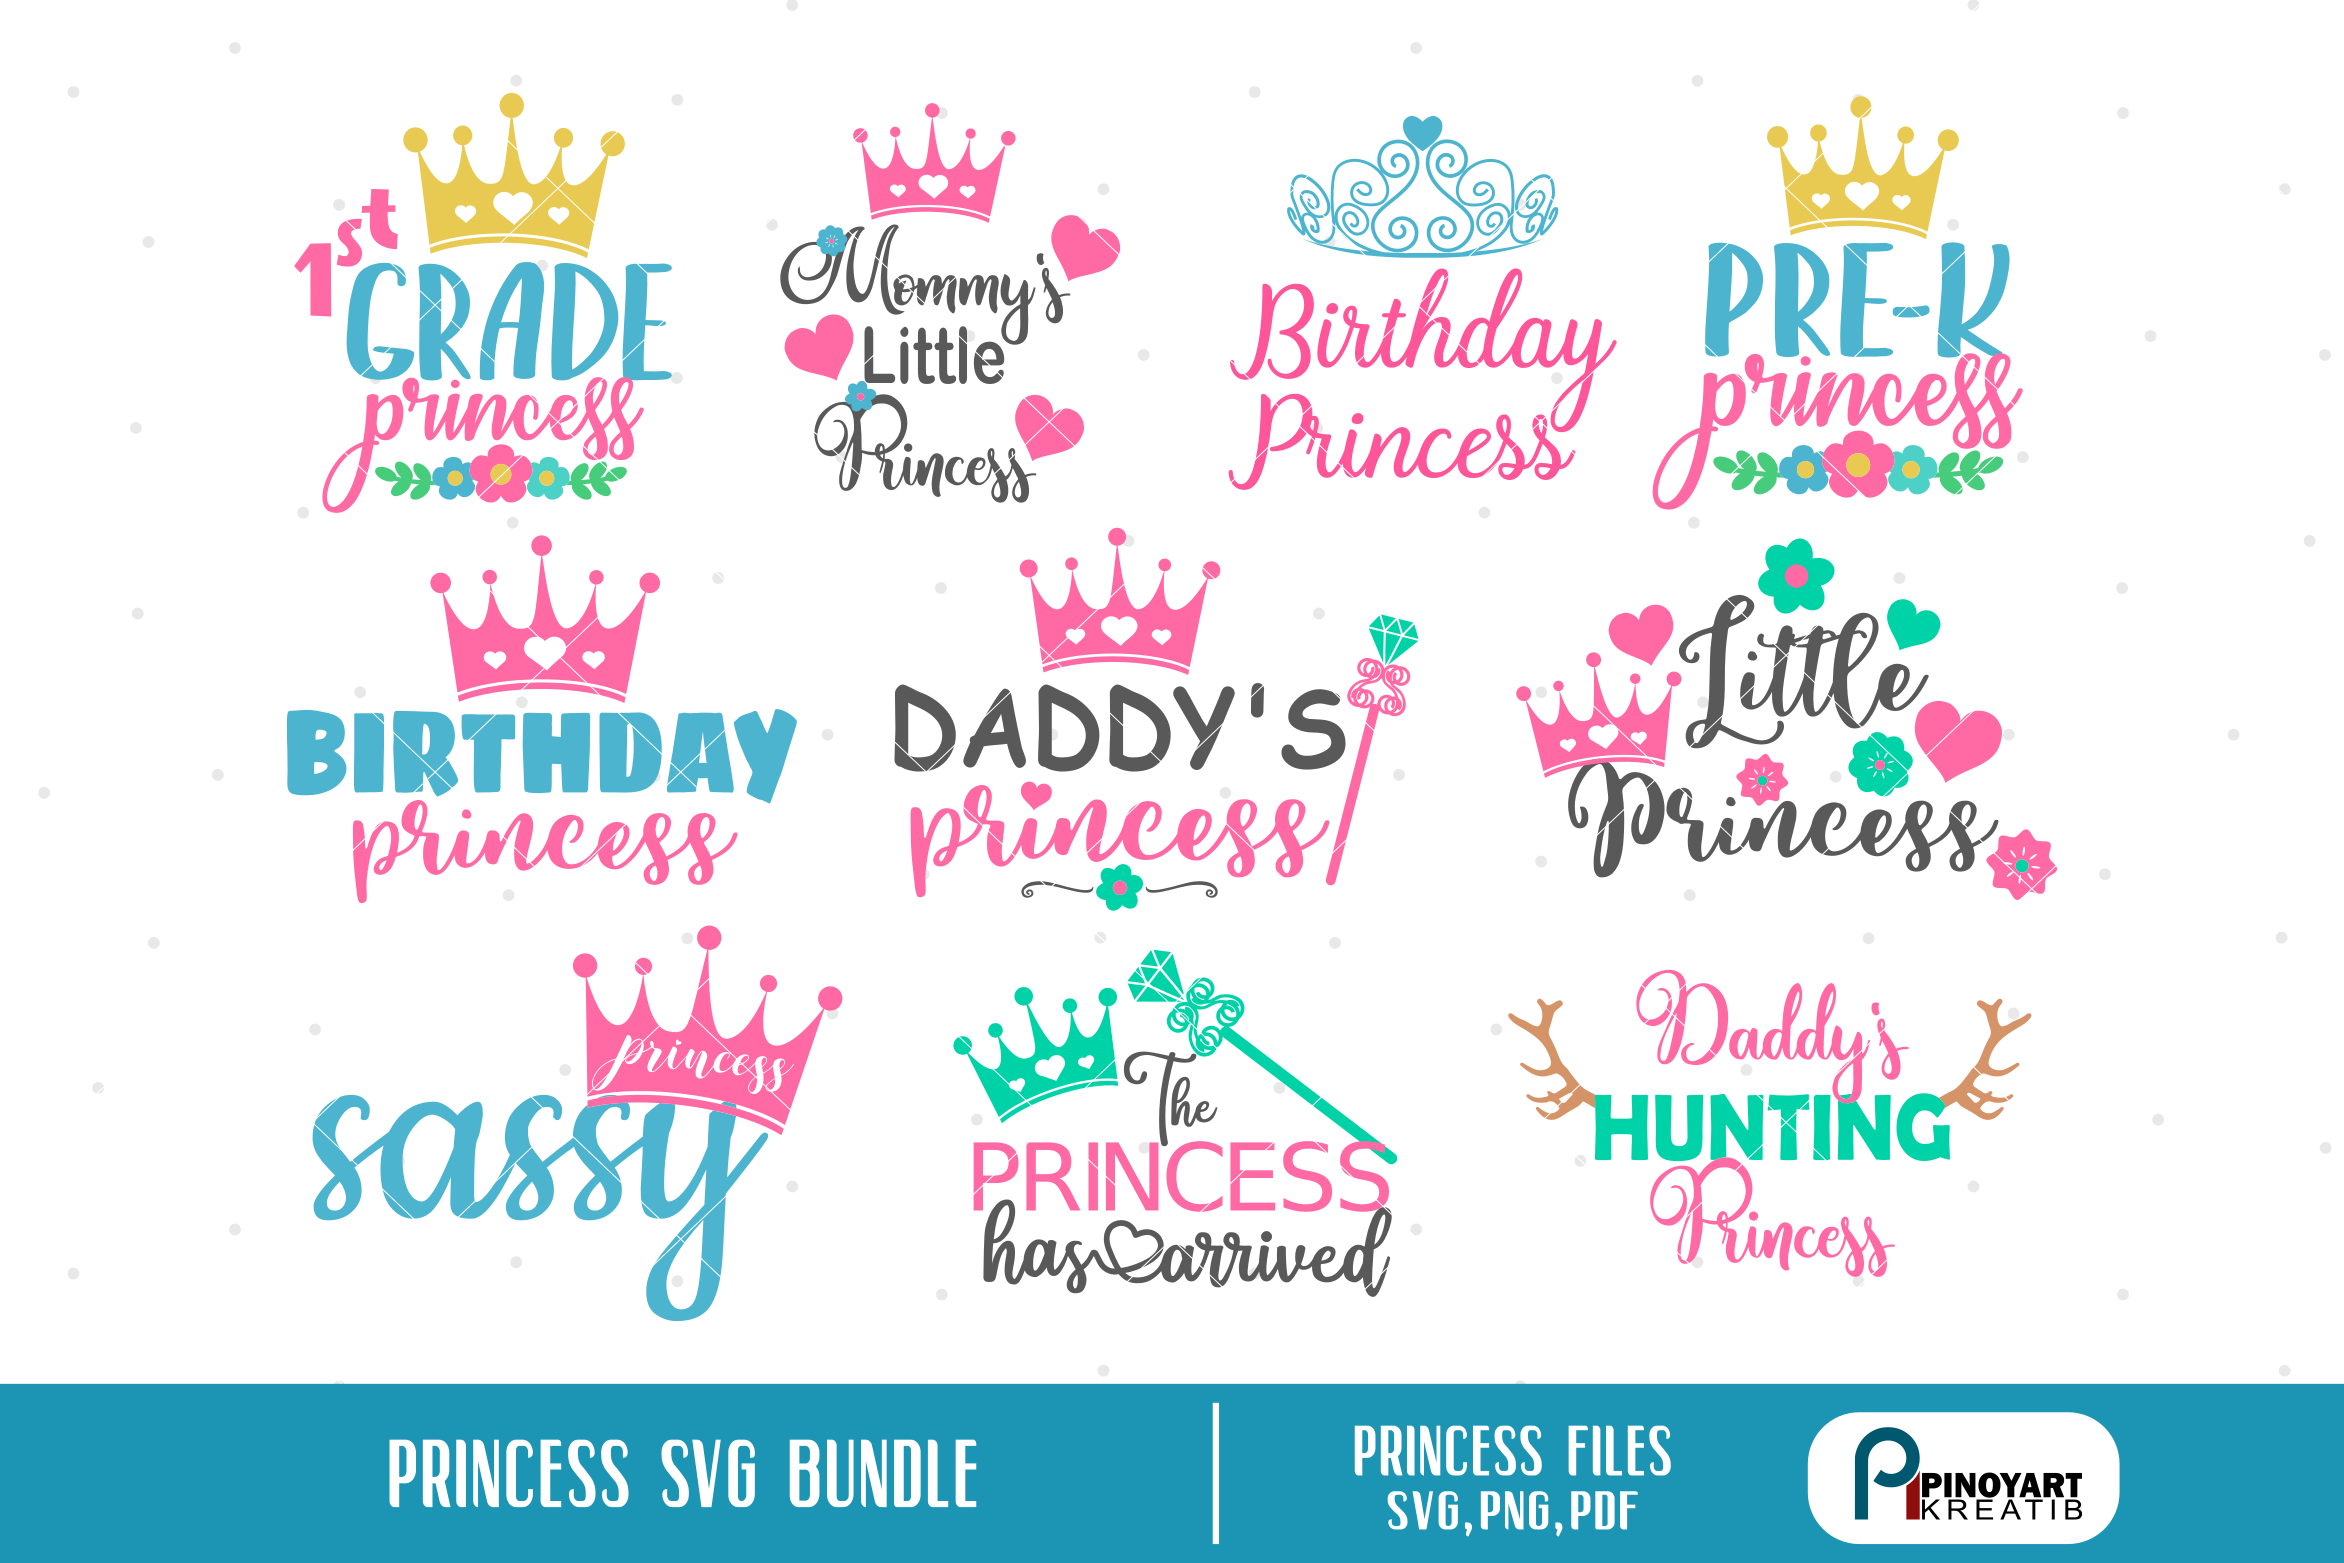 Download princess svg, princess svg file, birthday princess svg